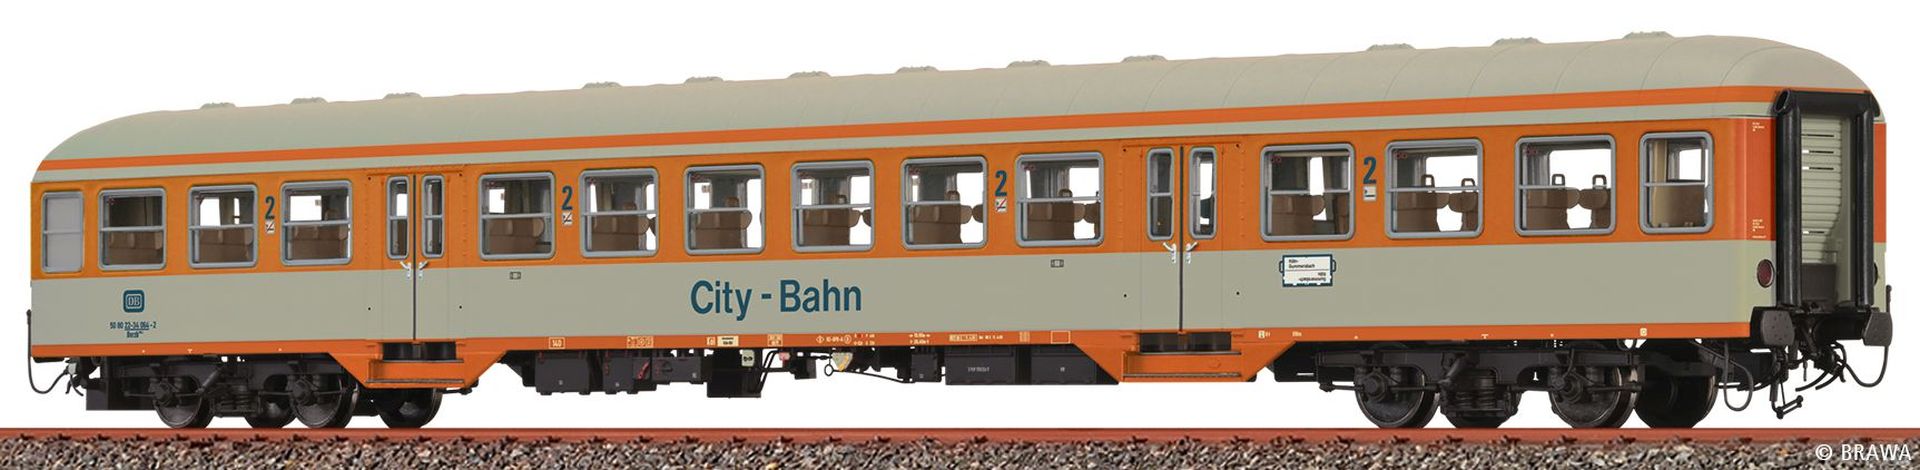 Brawa 46645 - Personenwagen Bnrzb 778.1 'City Bahn', DB, Ep.IV, DC-LED-Innenbeleuchtung